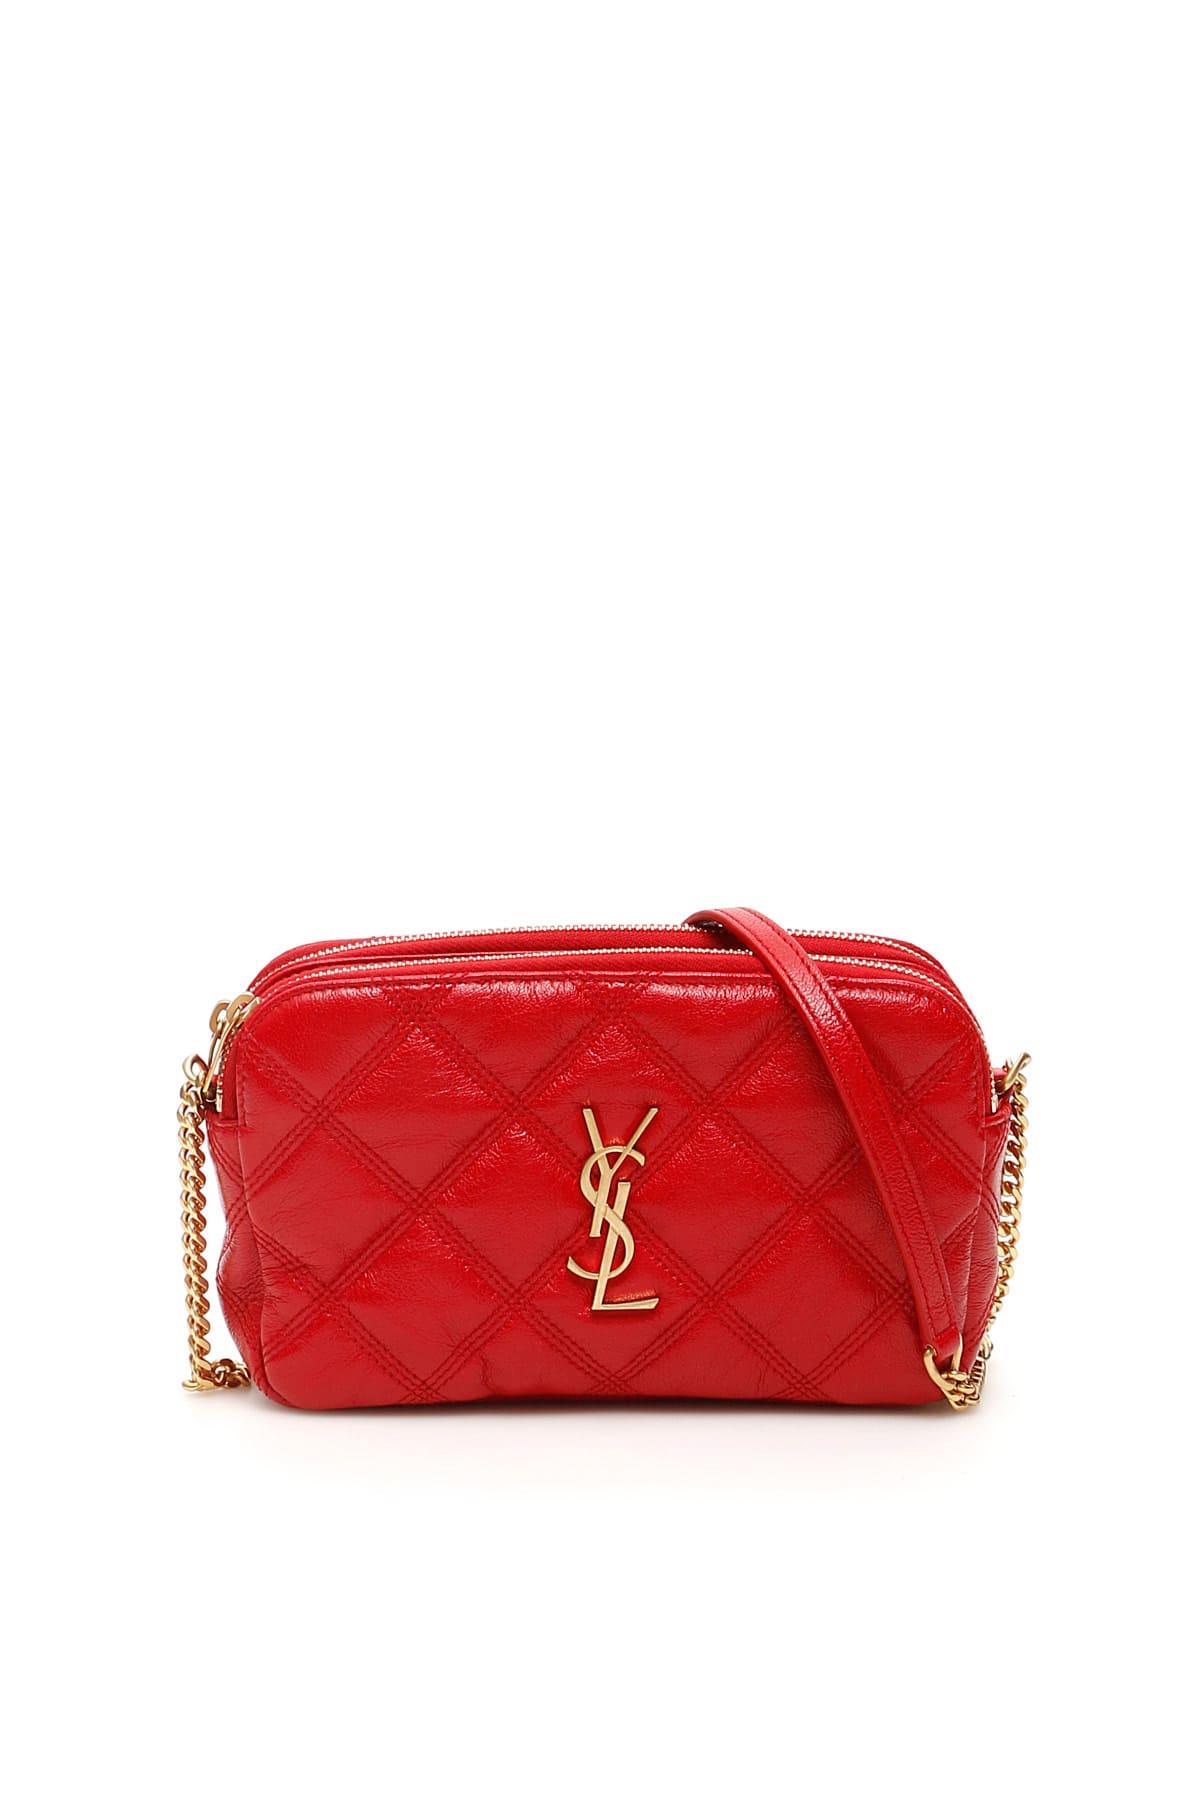 Yves Saint Laurent | Bags | Saint Laurent Monogram Logo Ysl Quilted Lou  Style Wristlet Pouch Bag Red Leather | Poshmark